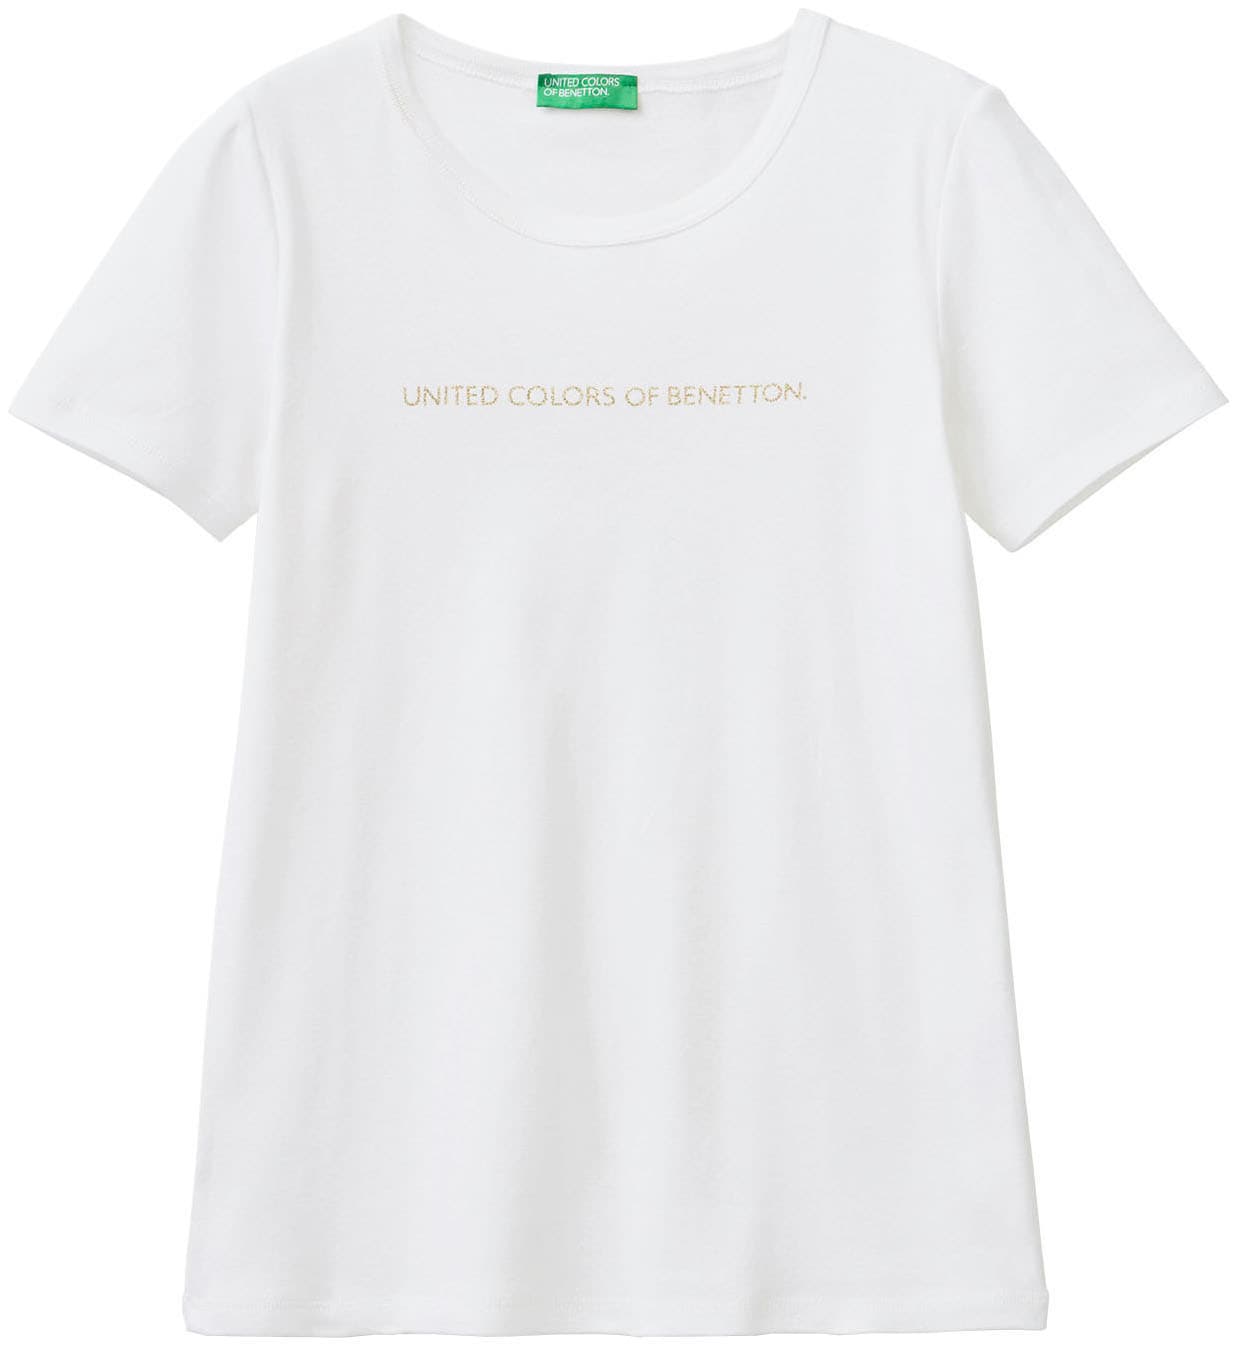 2 Bestseller Doppelpack | of im BAUR bestellen Benetton T-Shirt, tlg., (Set, unsere United Colors 2),